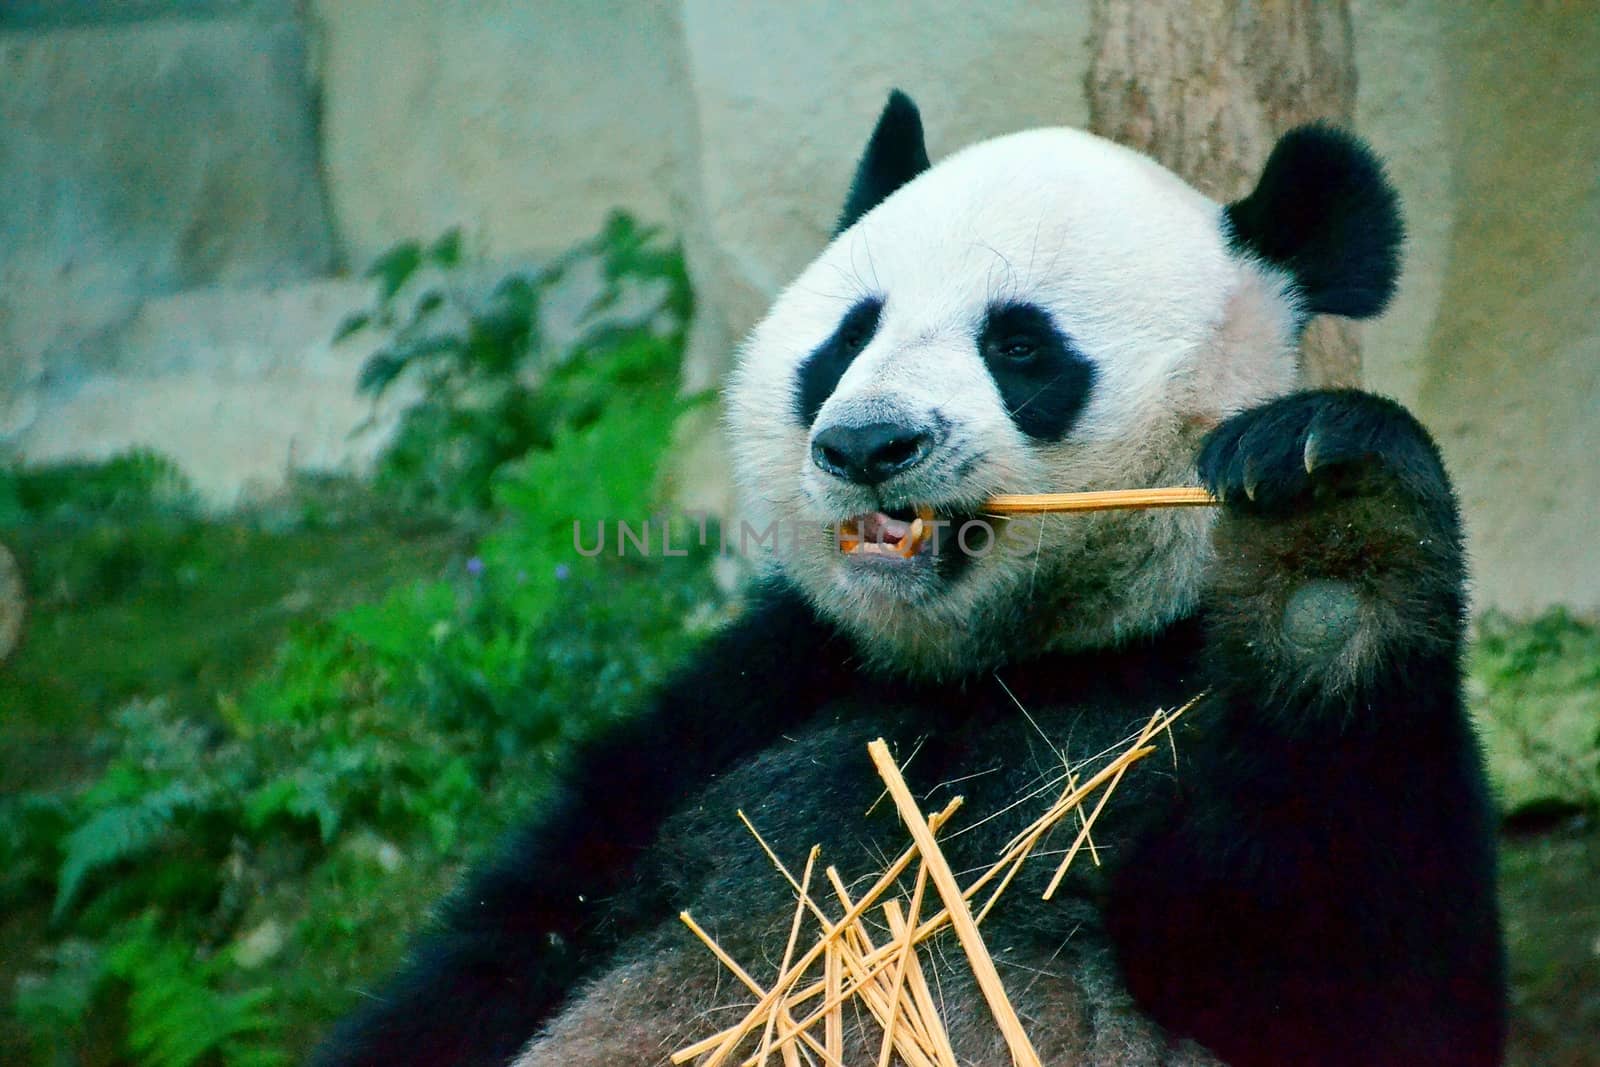 Panda is eating Bamboo by aonip